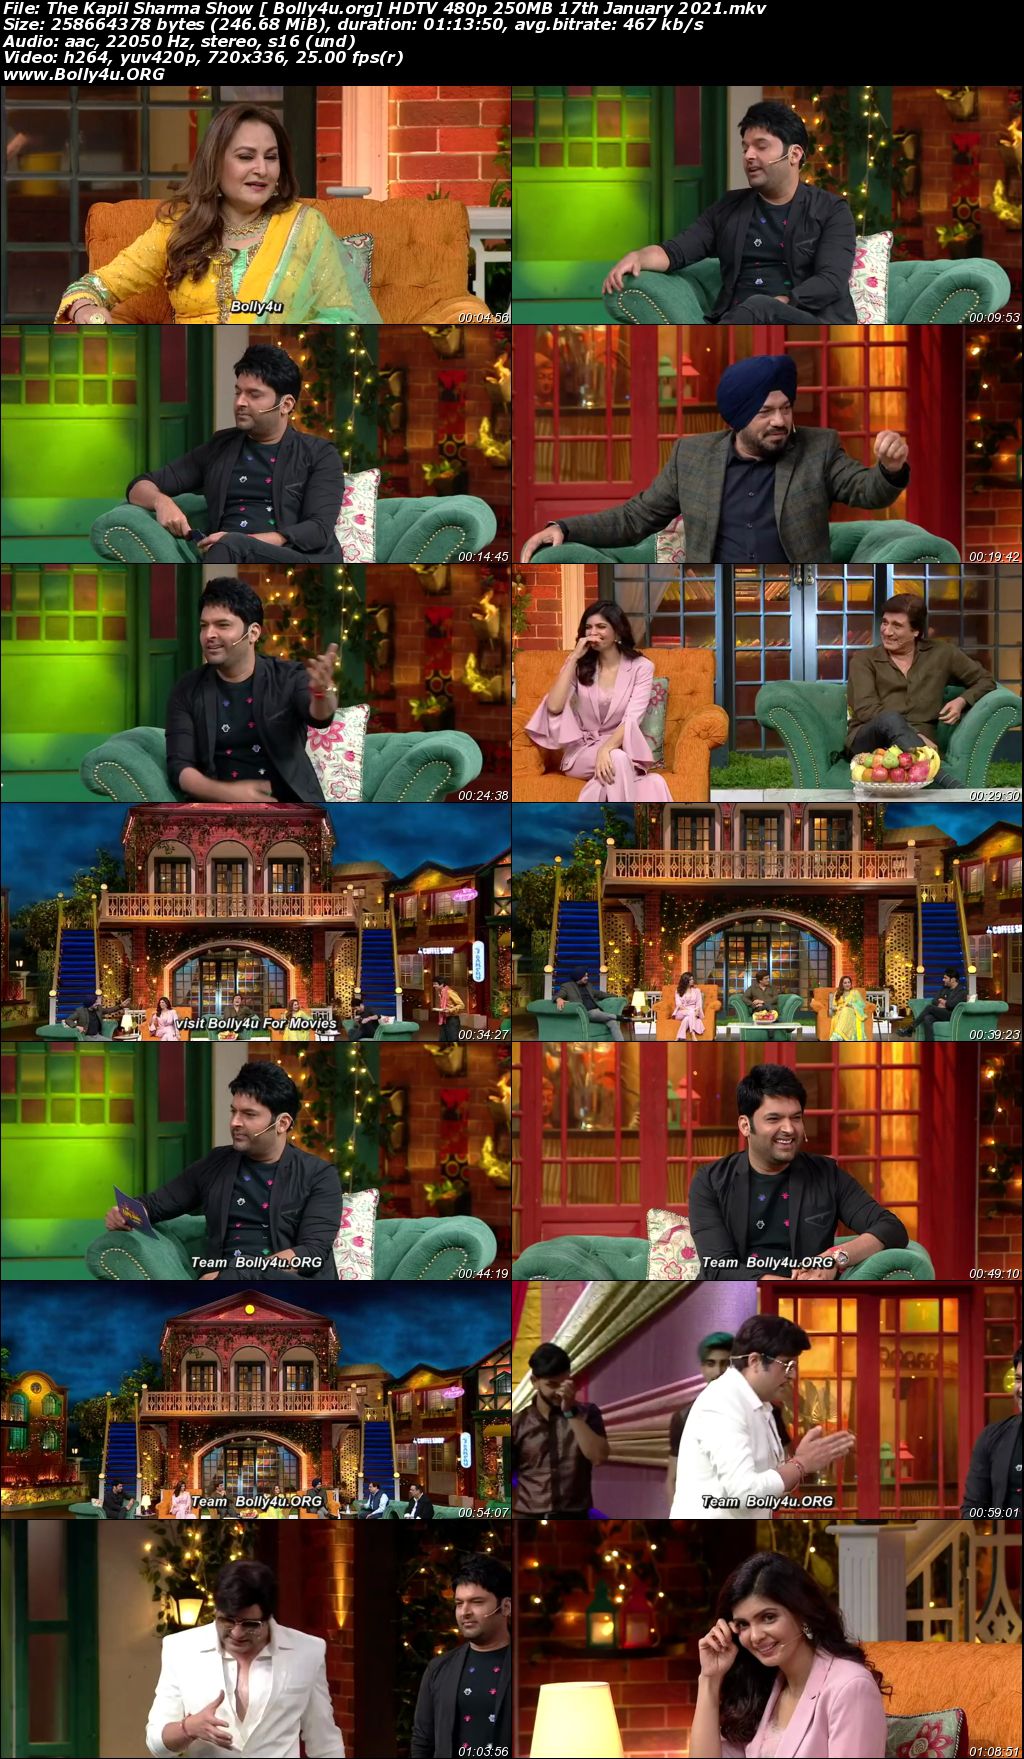 The Kapil Sharma Show HDTV 480p 250MB 17 January 2021 Download